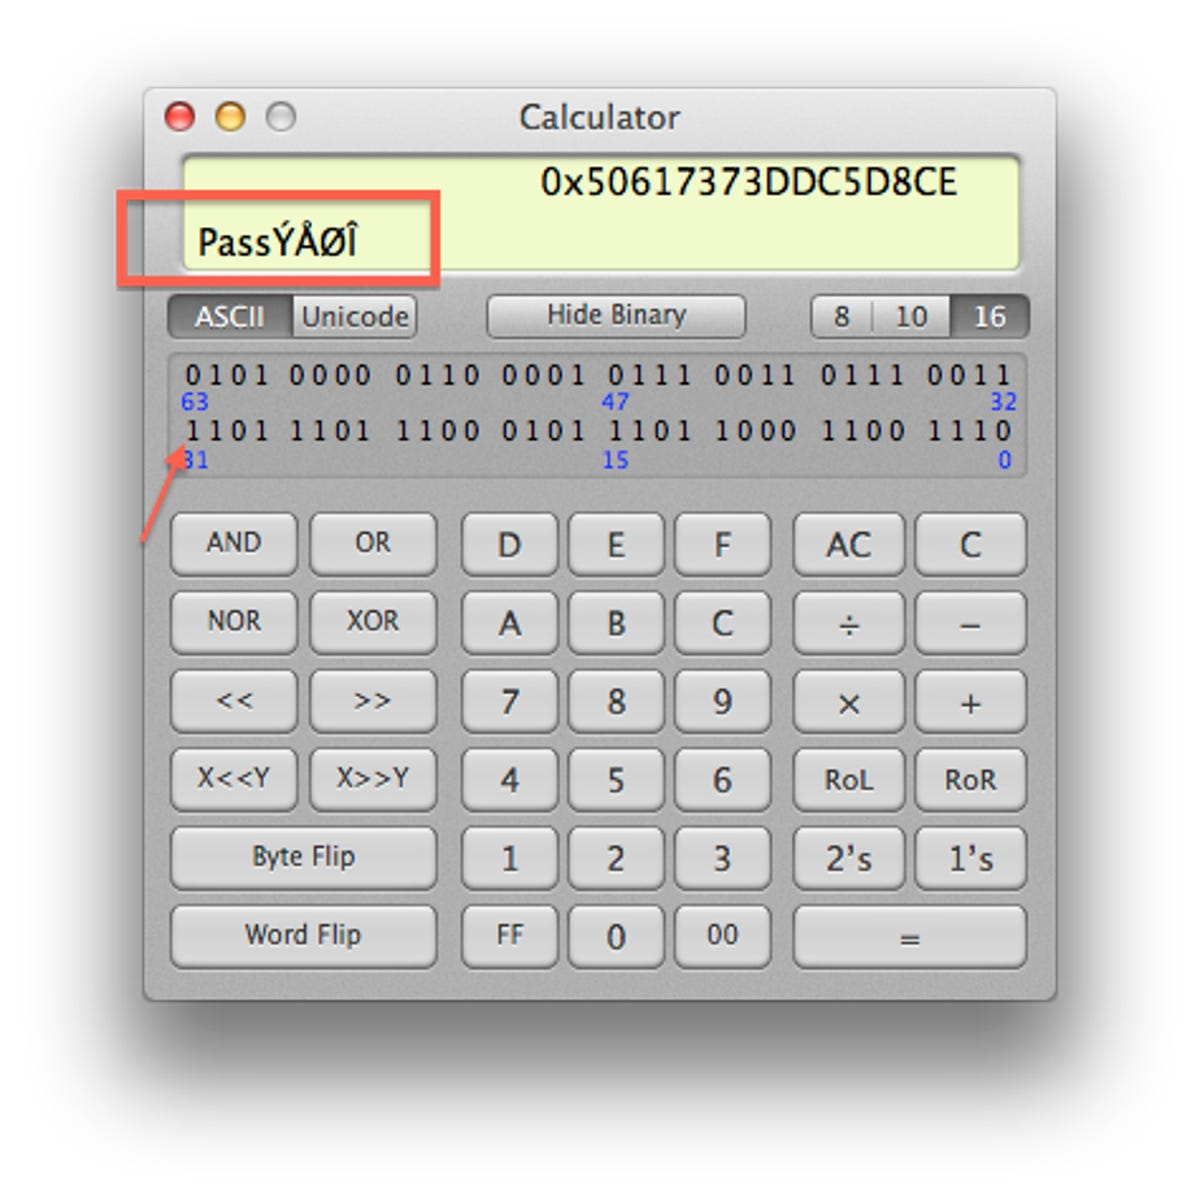 Firmware password decoding in the Calculator